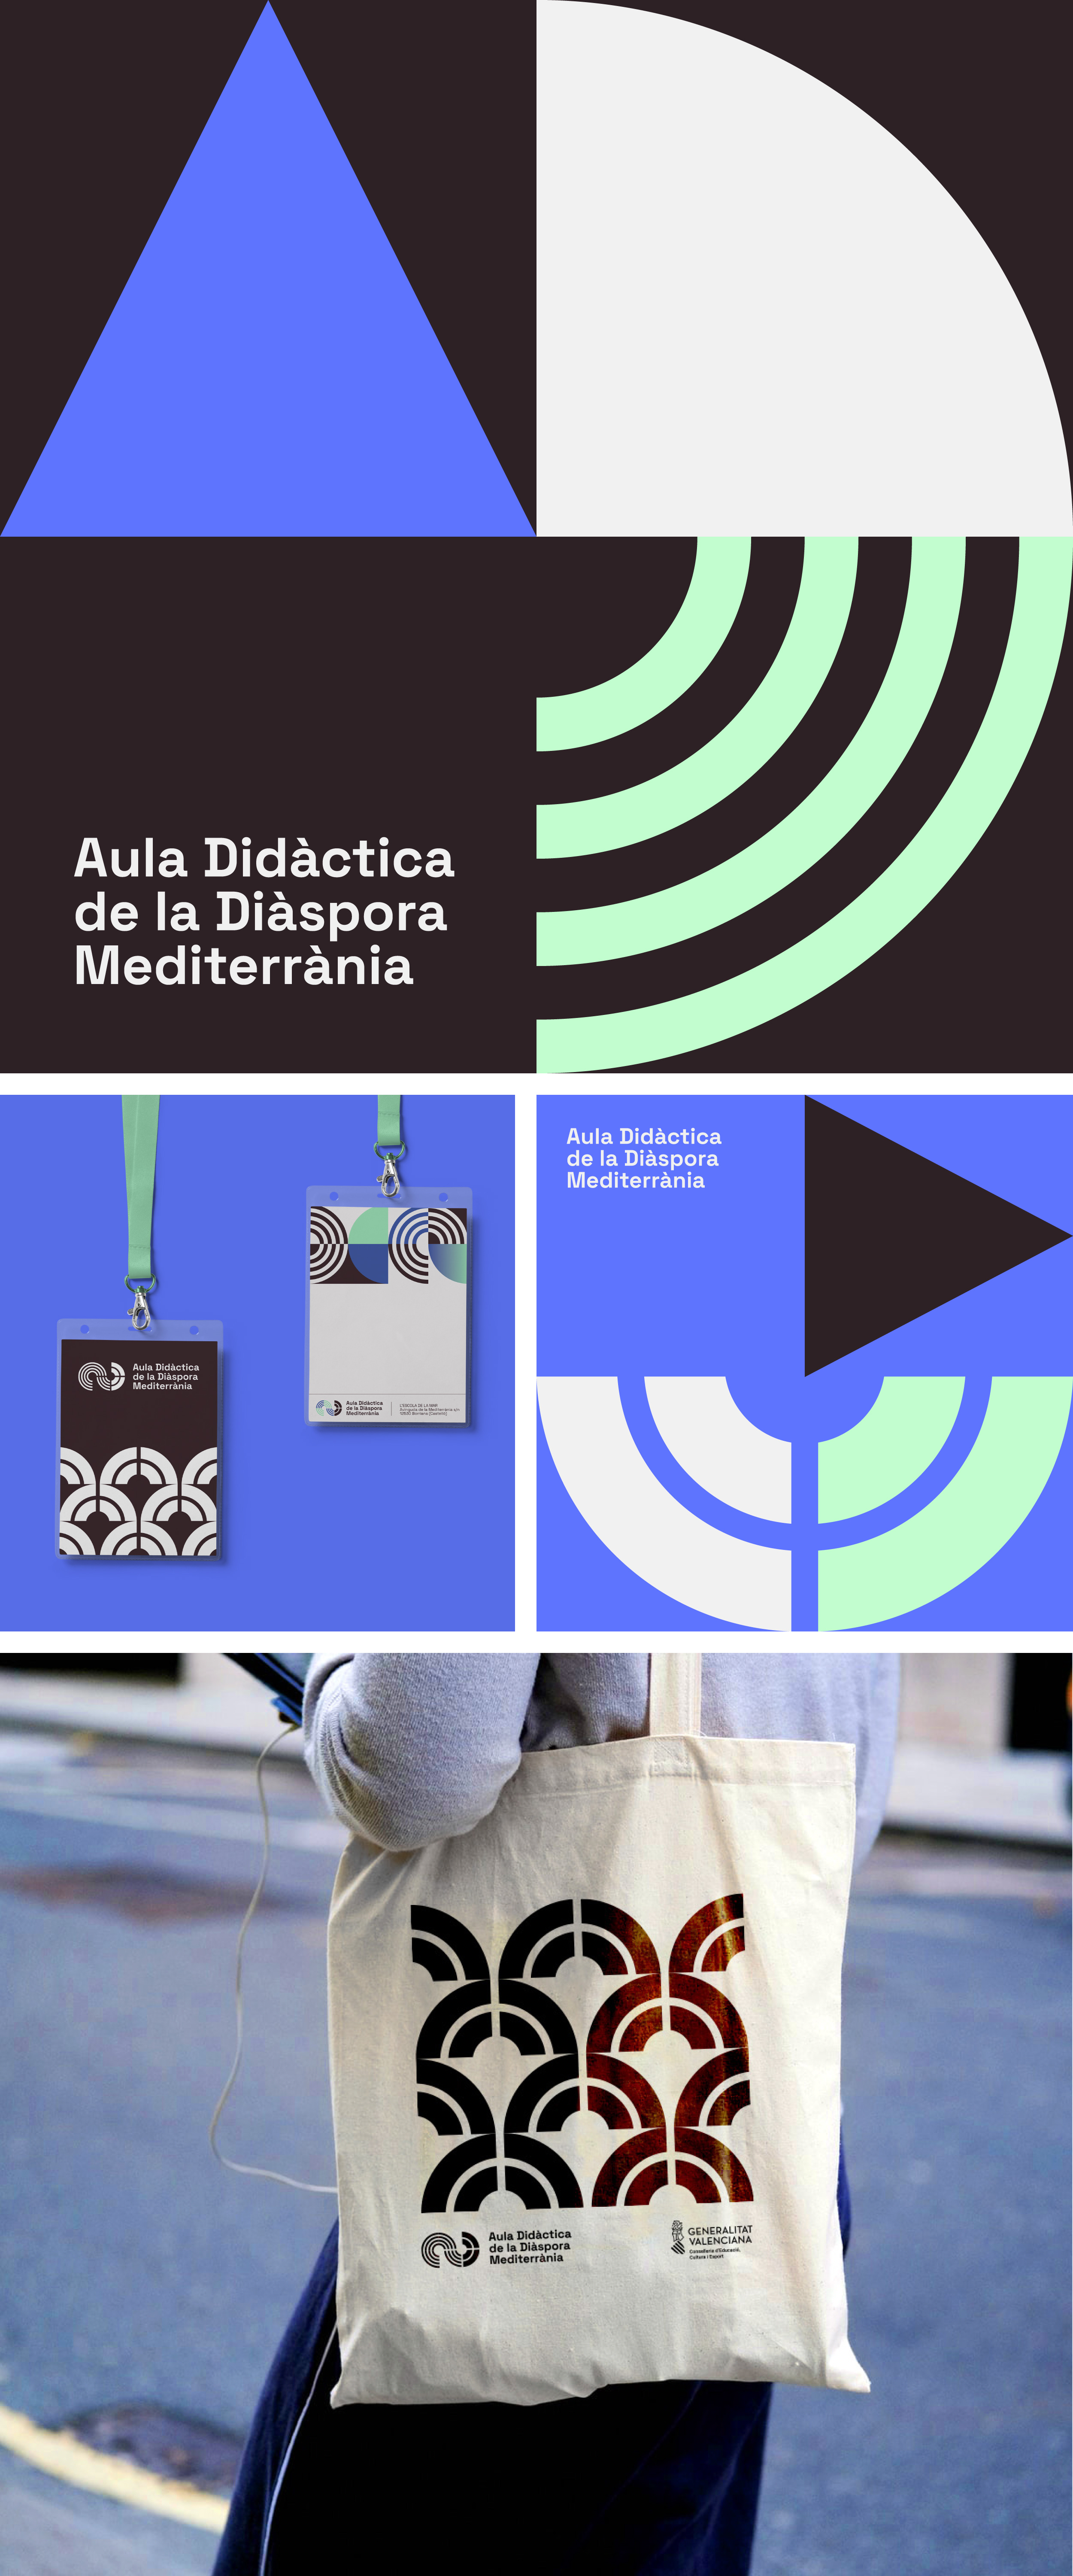 AULA DIDÀCTICA DE LA DIÀSPORA MDITERRÀNIA by LOCANDIA ESTUDIO - Creative Work - $i